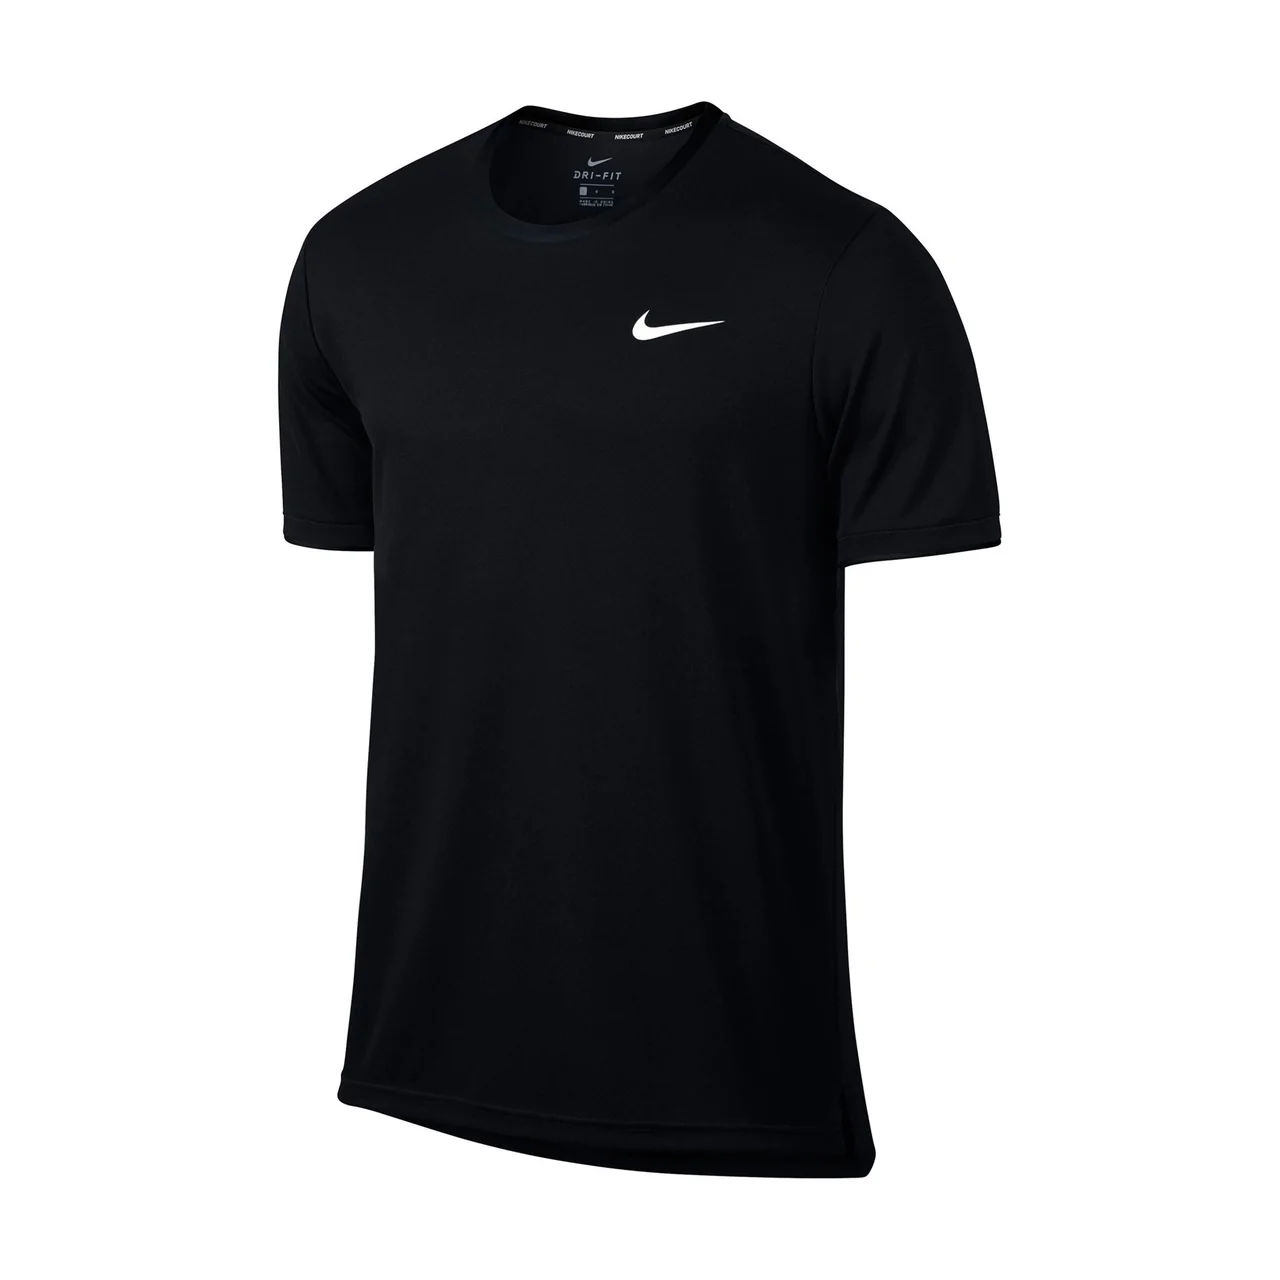 Nike Dry Top Team Black Size S